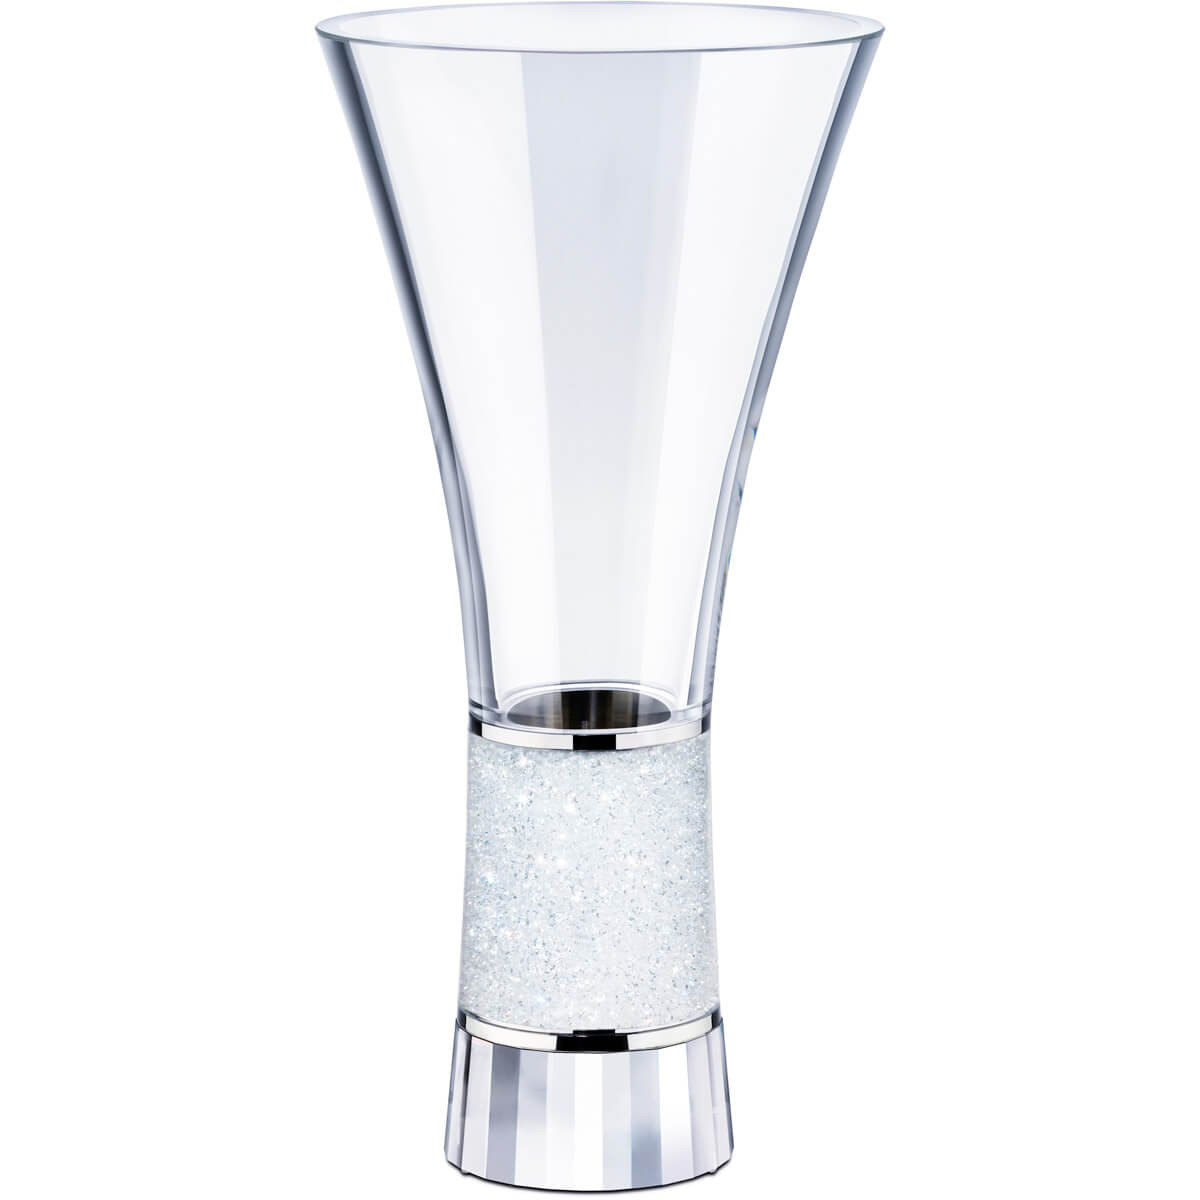 15 Elegant Very Large Glass Vase 2024 free download very large glass vase of crystalline vase exclusively on swarovski com throughout crystalline vase